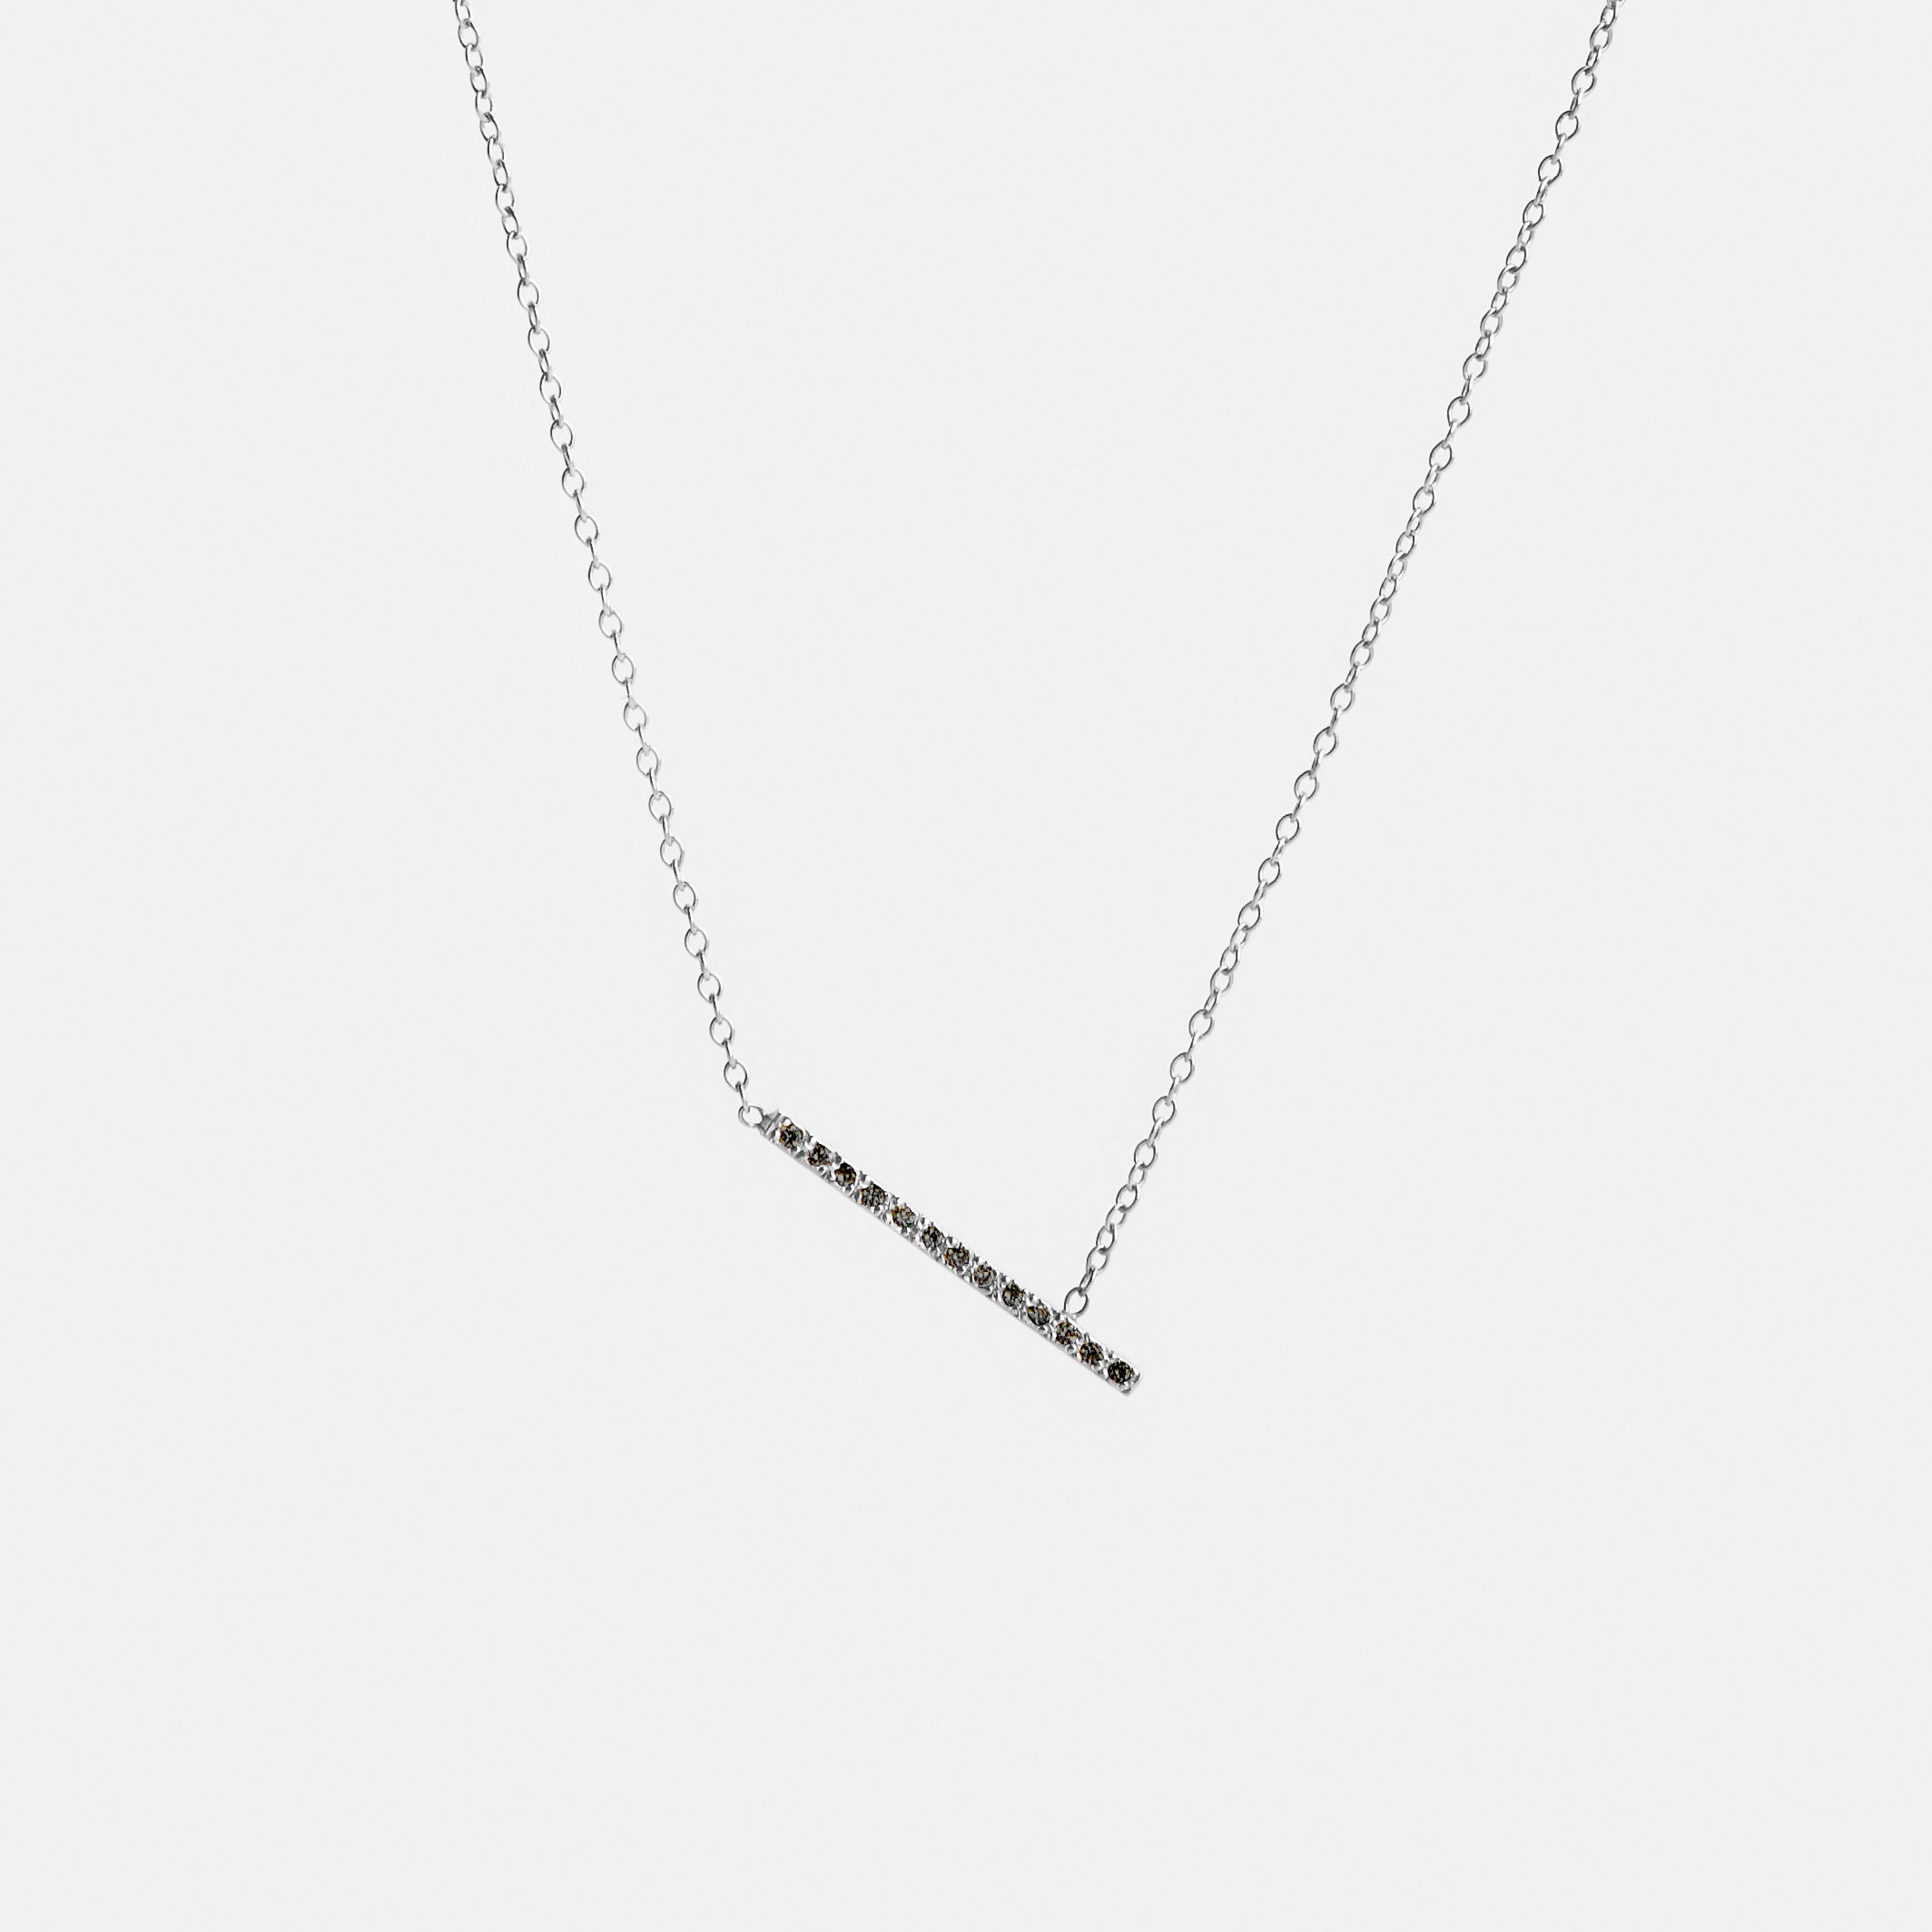 Tira Alternative Necklace in 14k White Gold set with Black Diamonds By SHW Fine Jewelry NYC